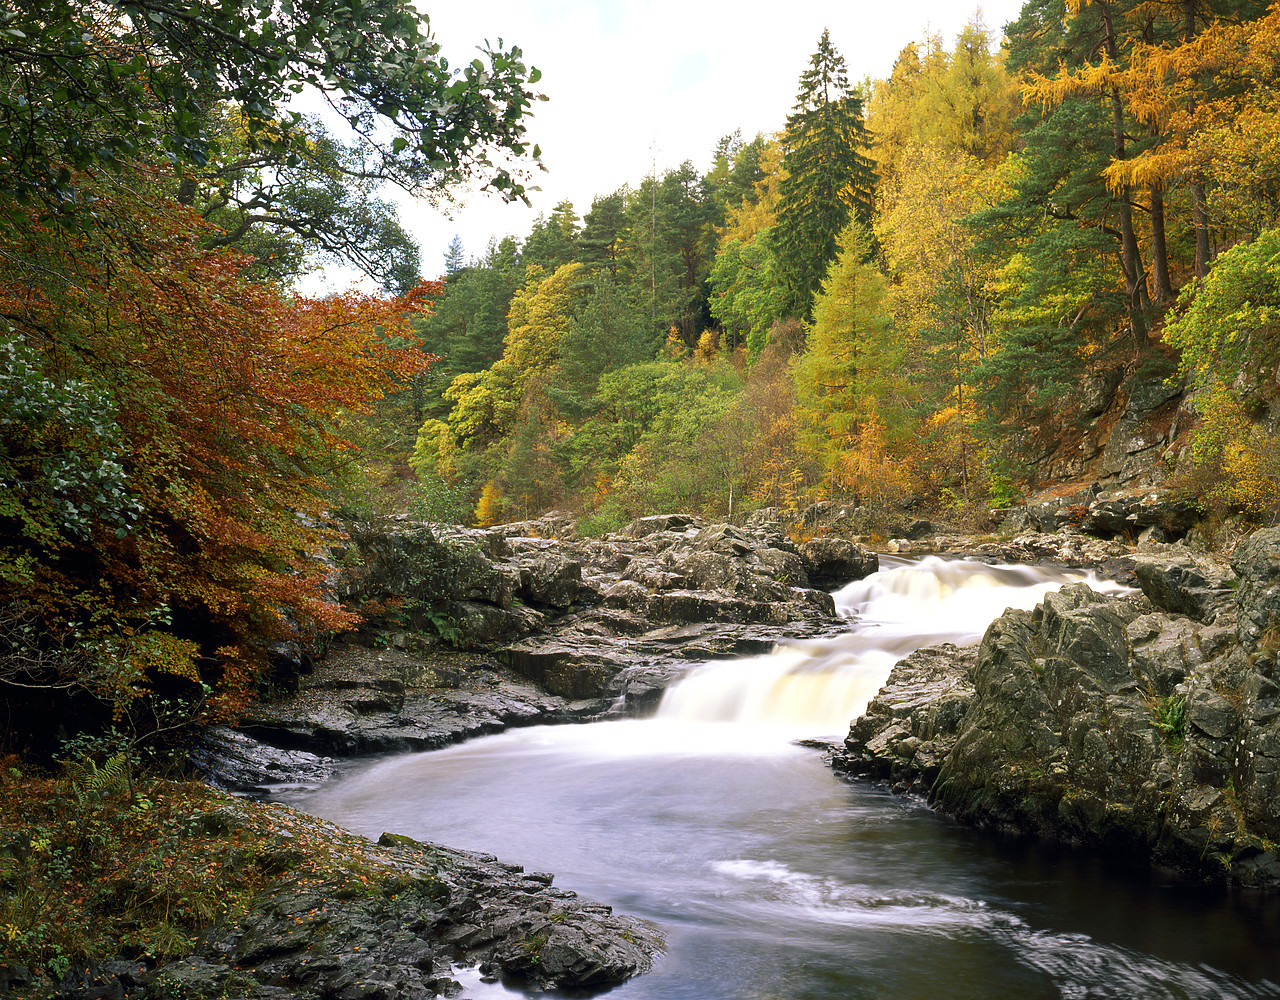 #970483-1 - Waterfall In Autumn, Linn of Tummel, Tayside Region, Scotland